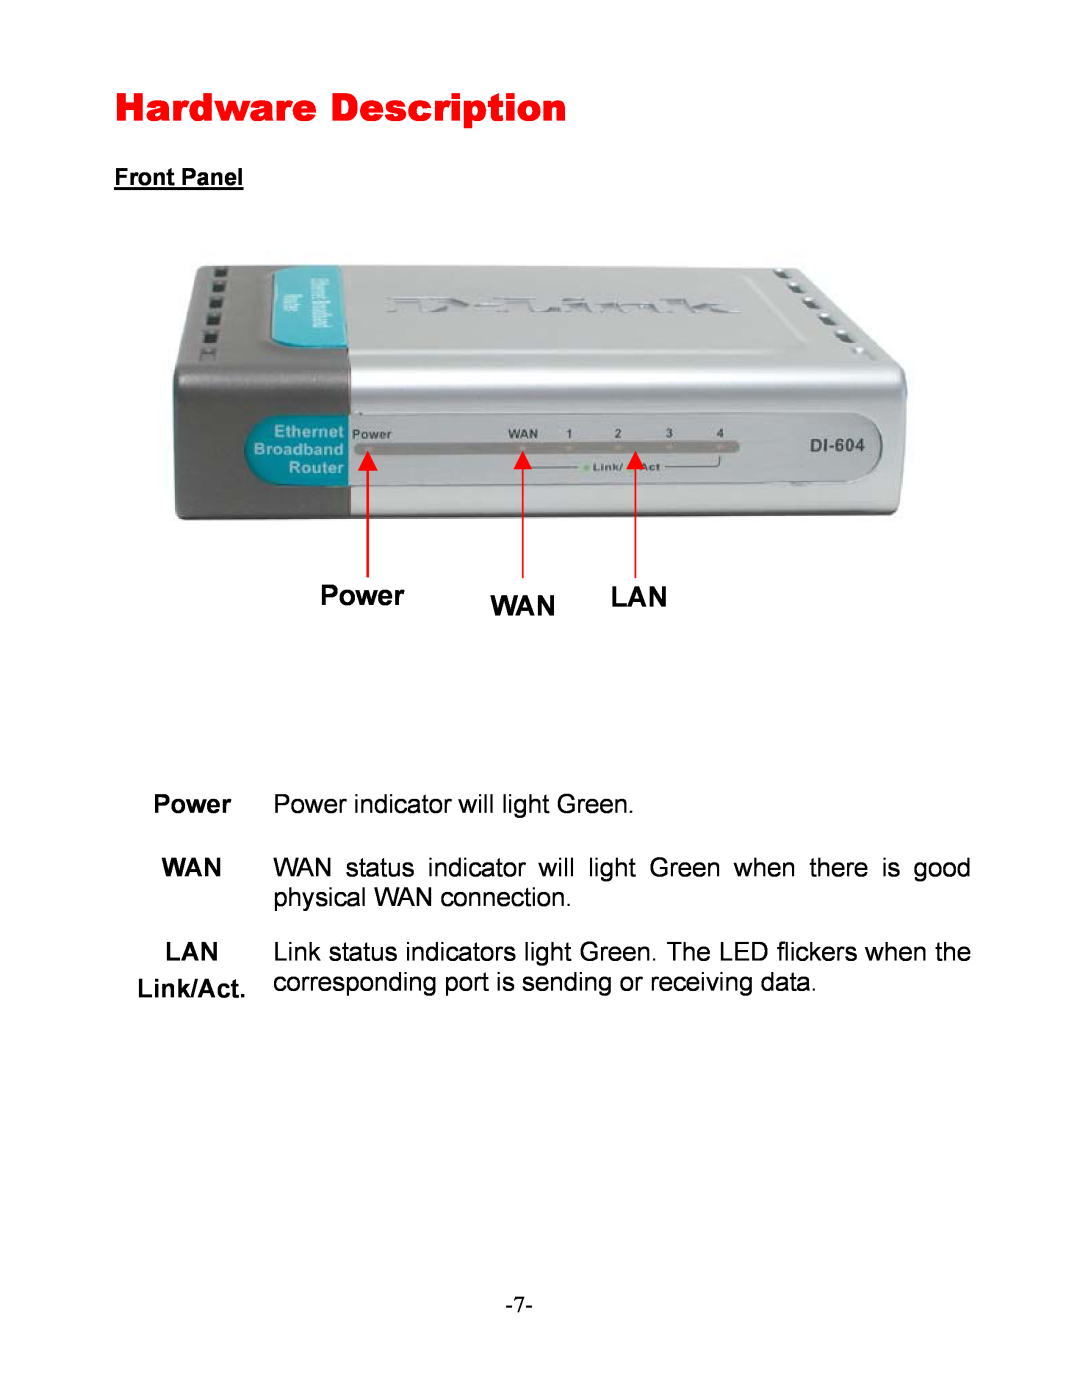 D-Link DI-604 manual Hardware Description, Power WAN LAN 